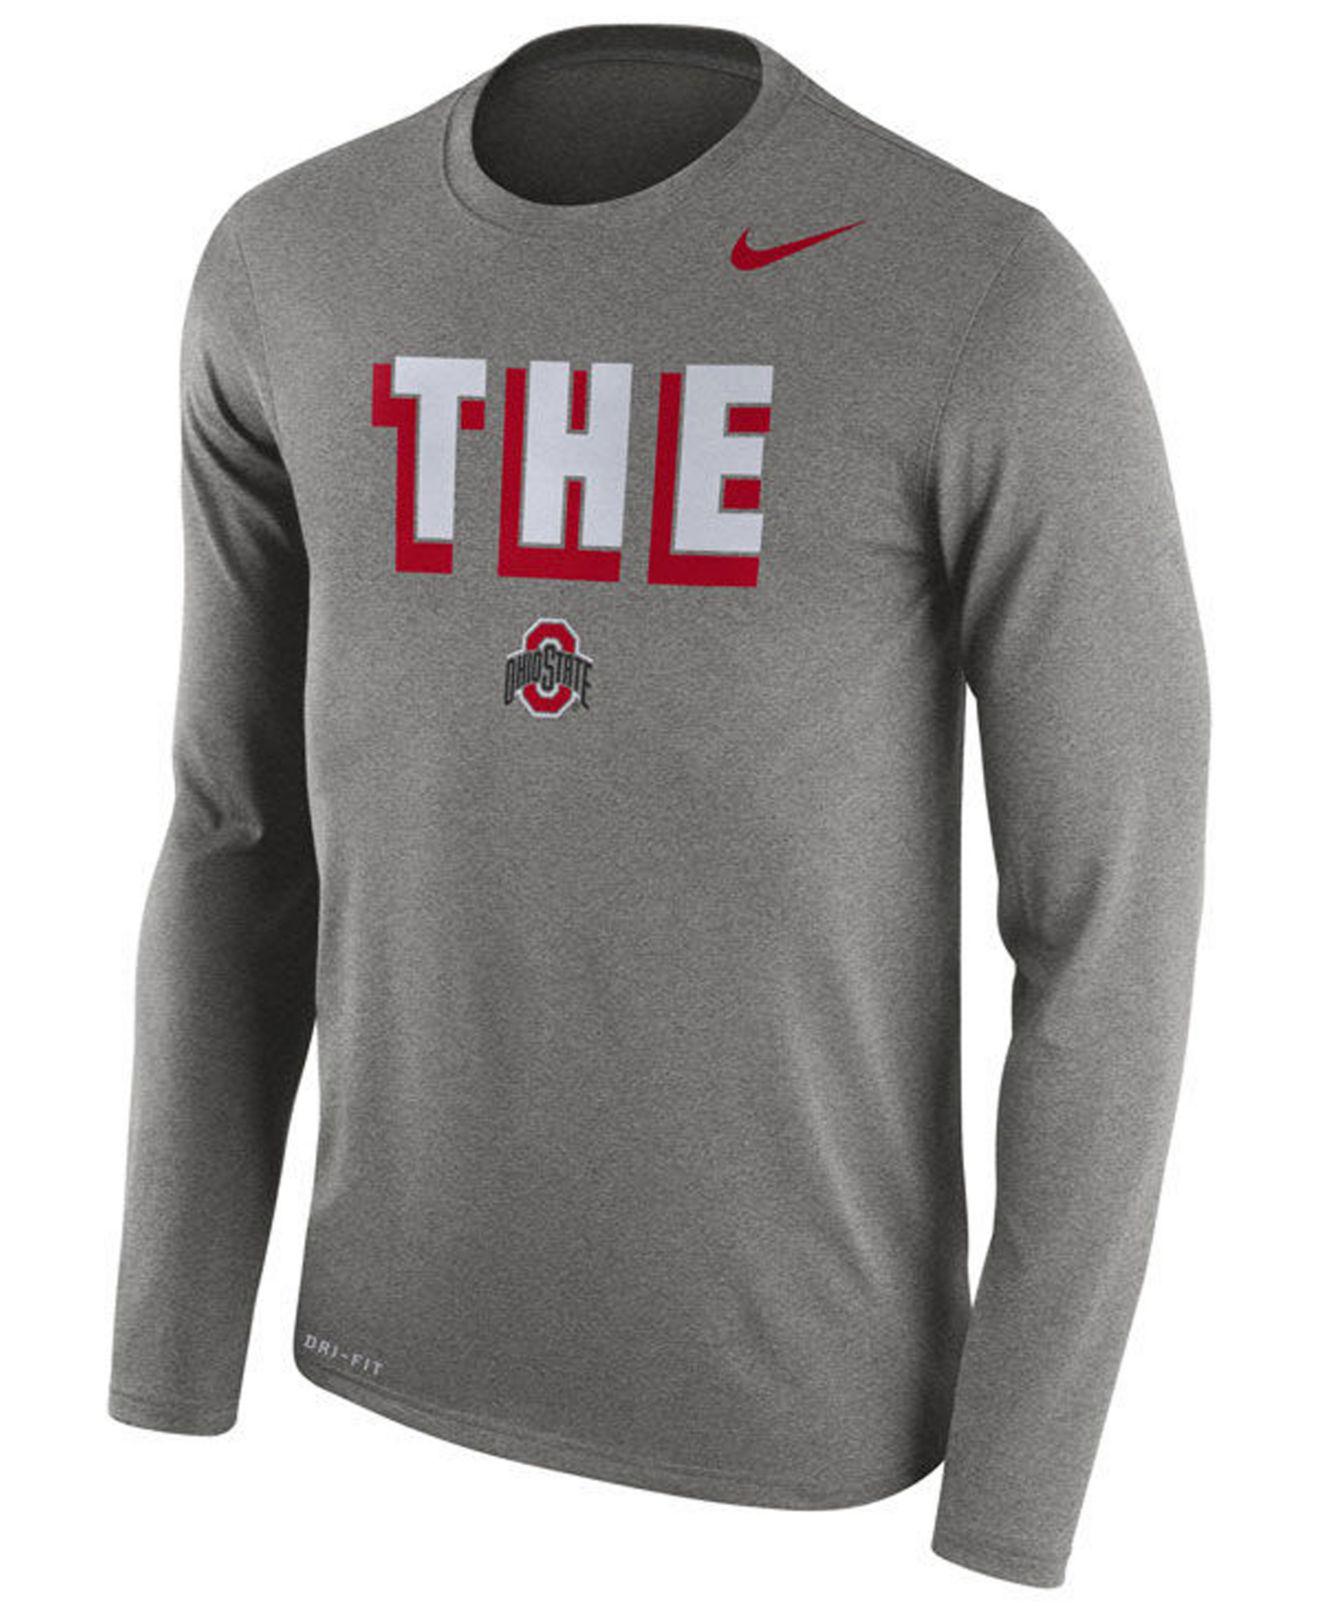 Nike Dri-fit College (ohio State) Men's Long Sleeve Top in Dark Grey ...